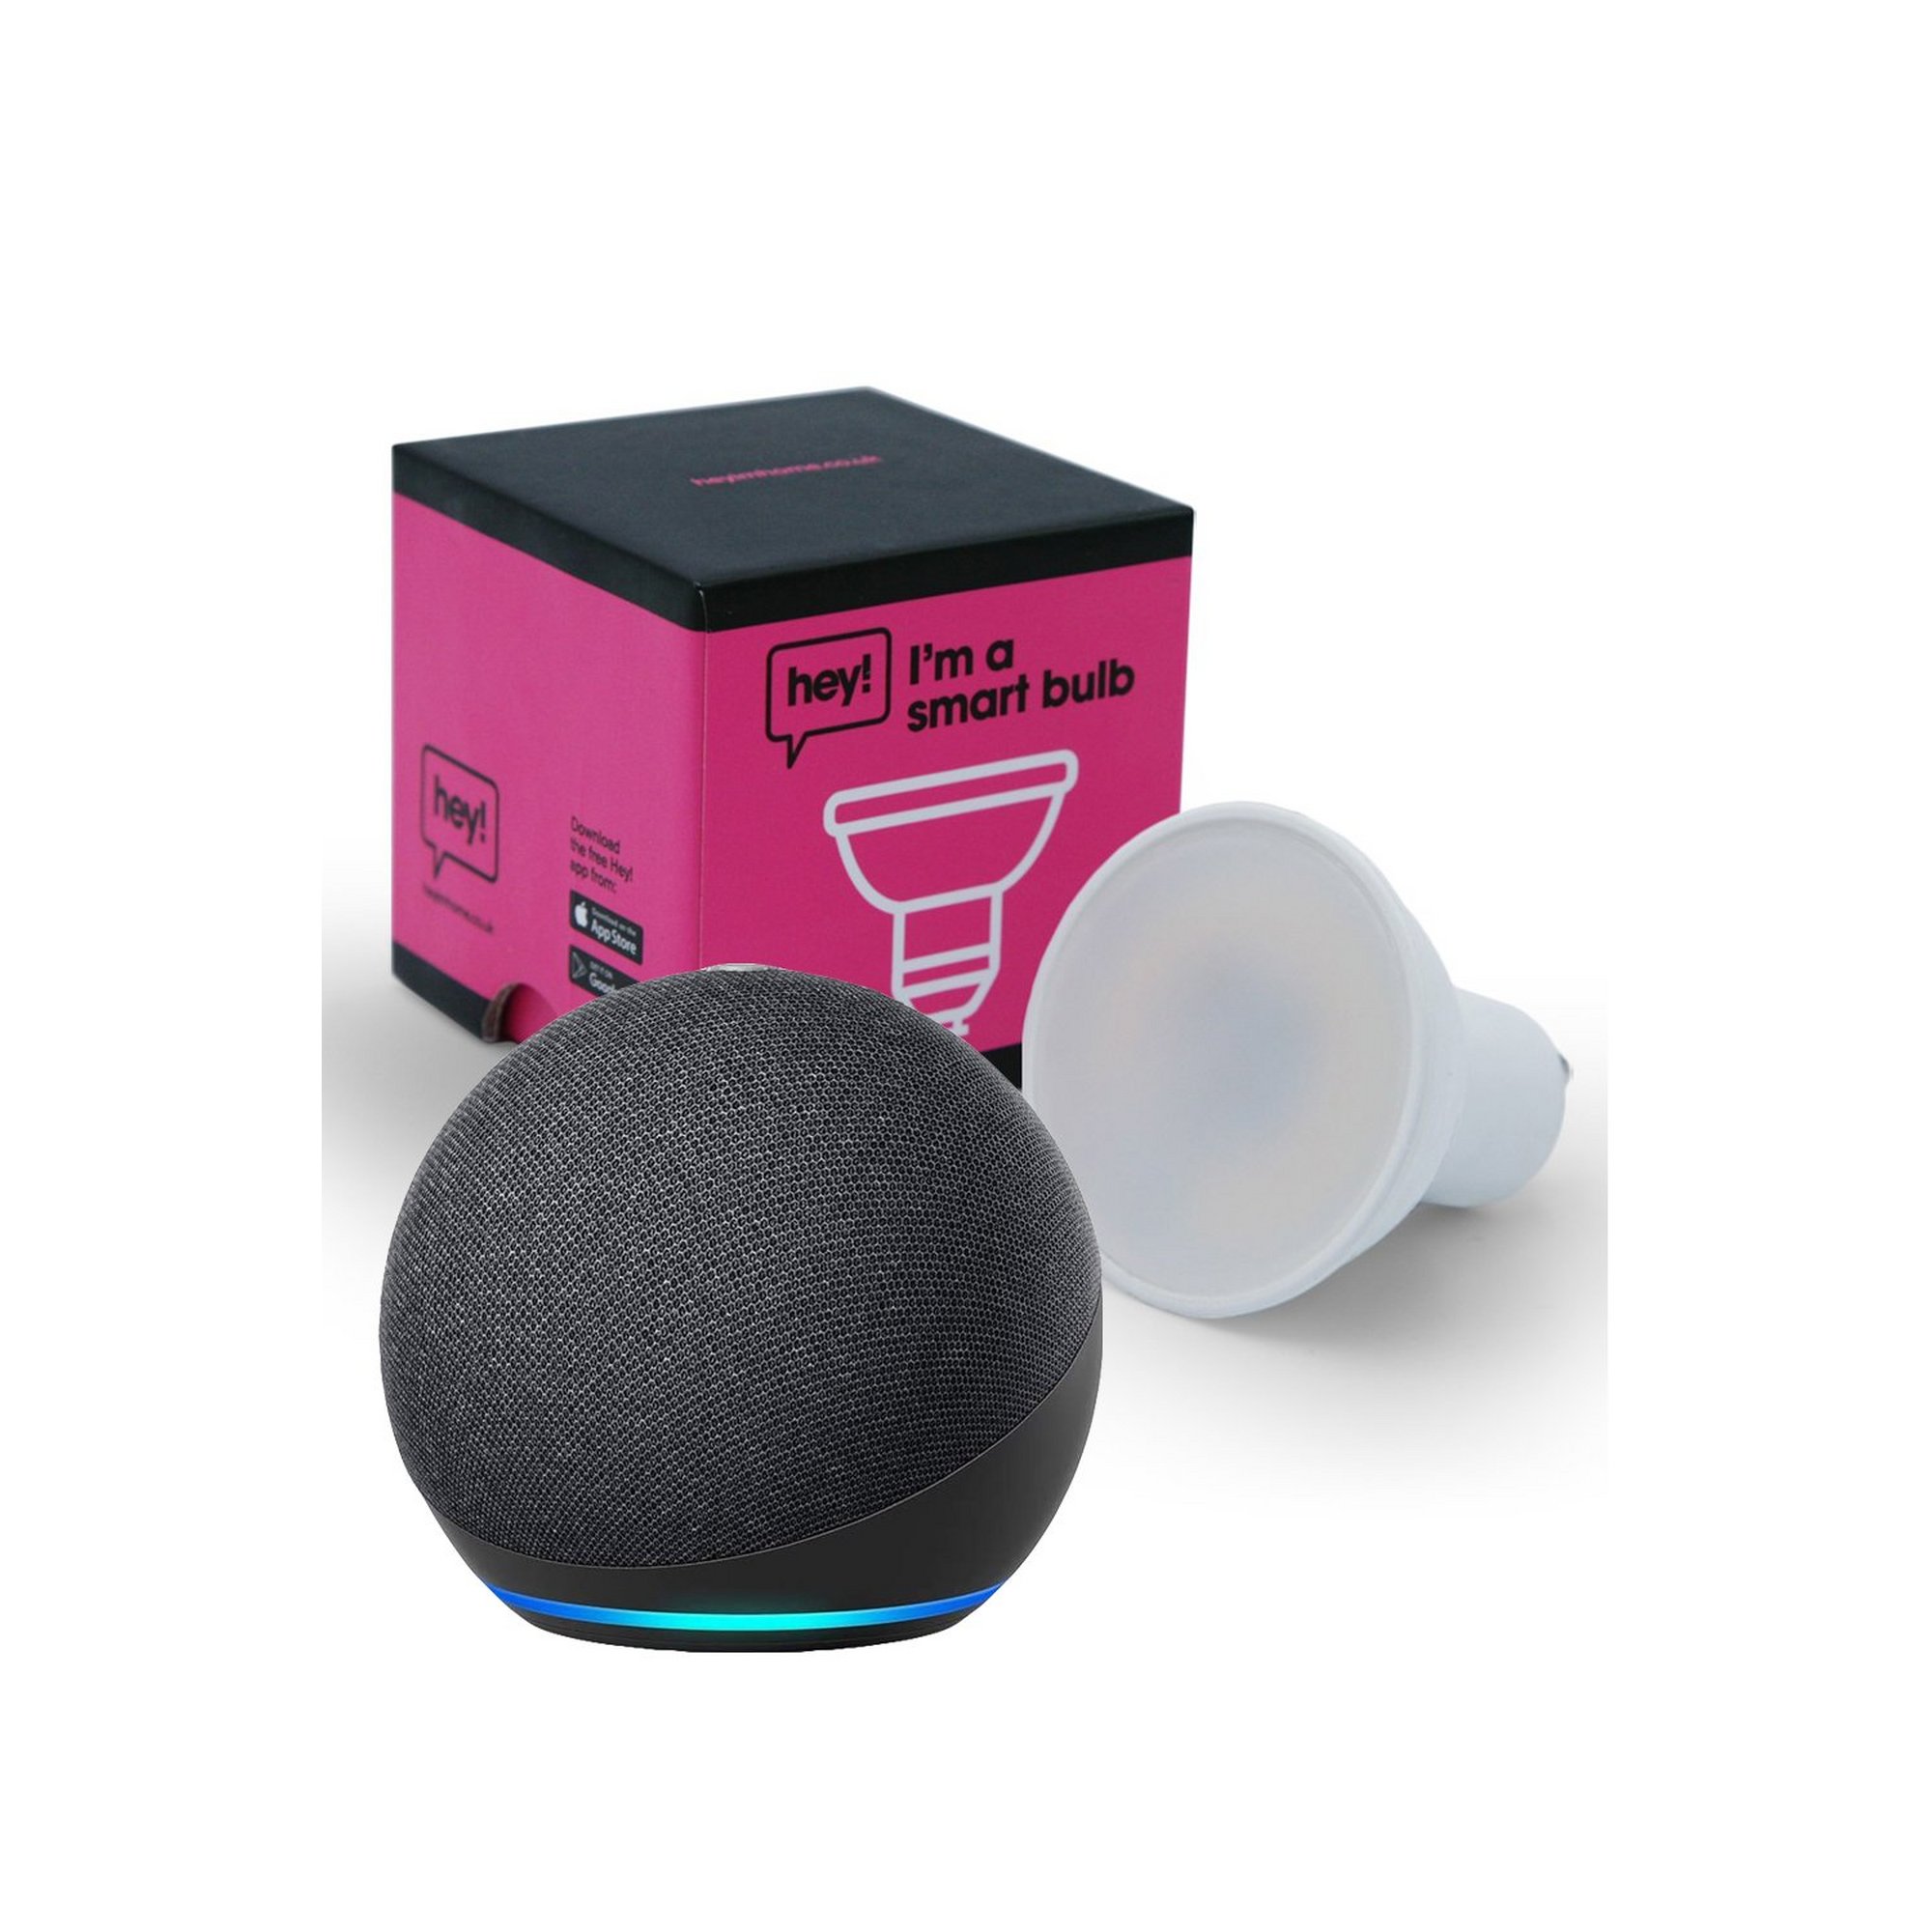 Hey Amazon Echo Dot 4th Generation and Smartbulb Spotlight GU10 Twin Pack